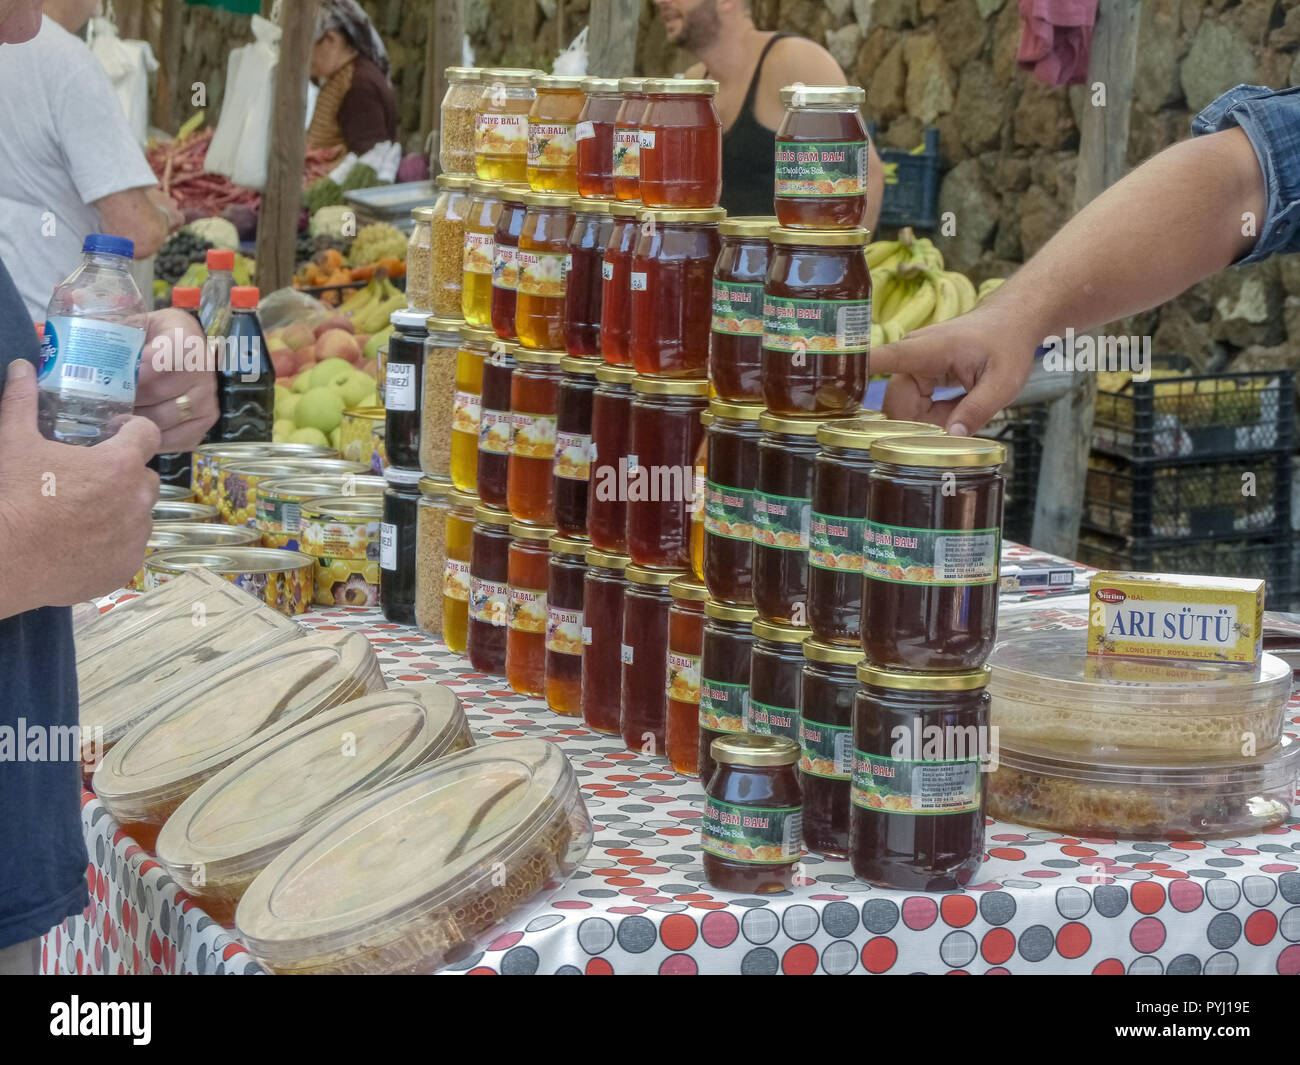 Buying Jars of Turkish Honey at the Market Stock Photo